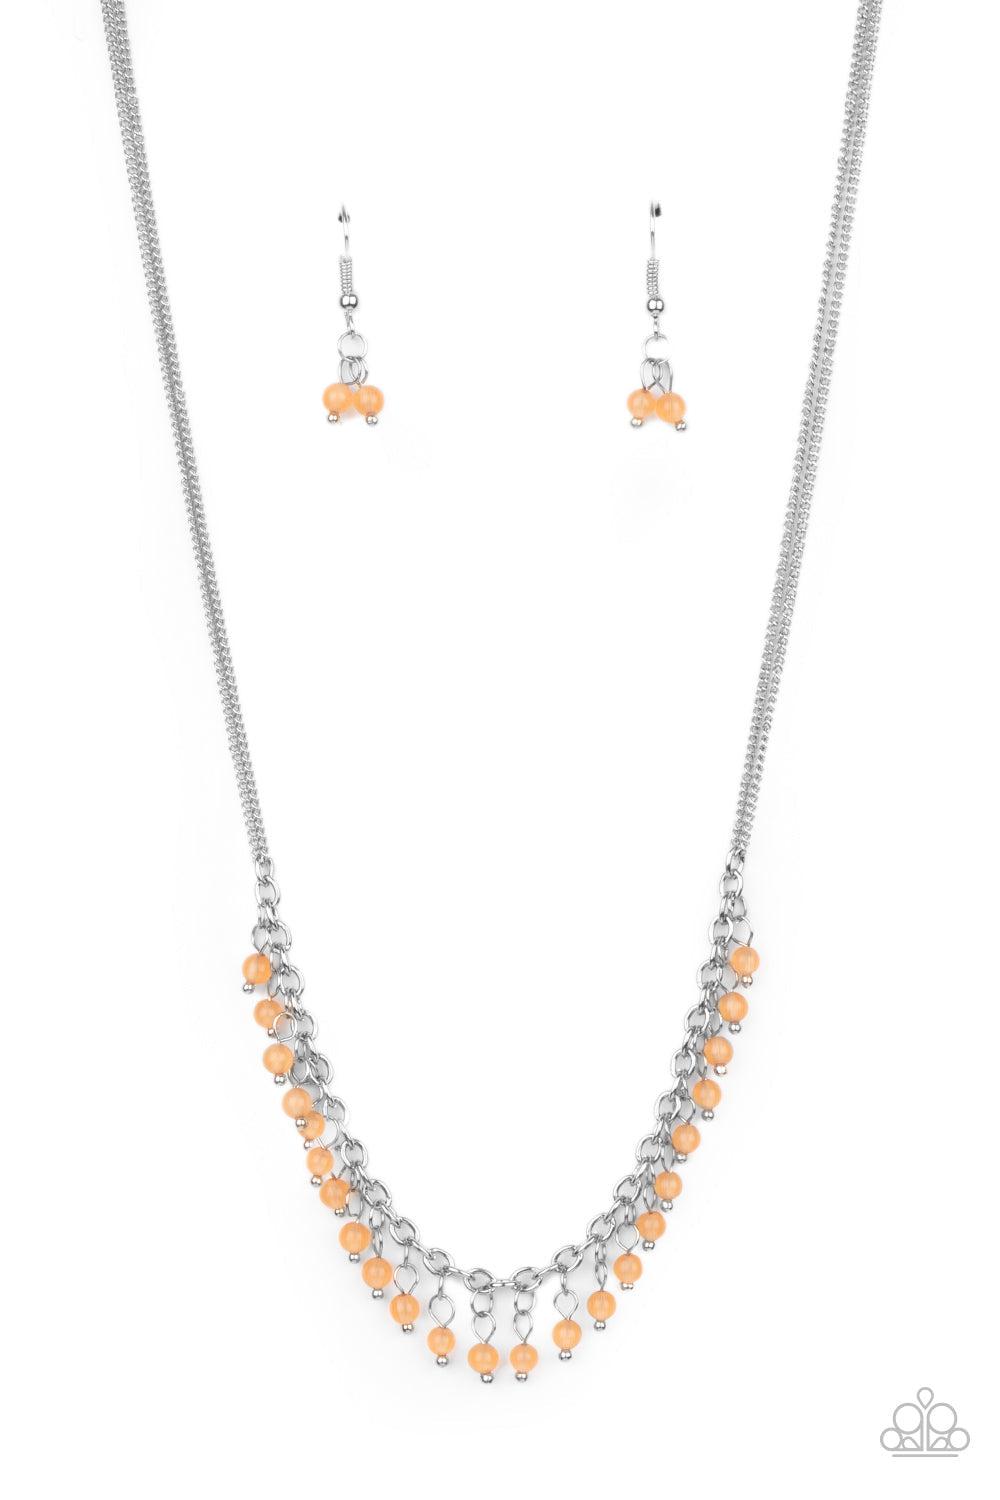 DEW A Double Take Orange Cat&#39;s Eye Stone Necklace - Paparazzi Accessories- lightbox - CarasShop.com - $5 Jewelry by Cara Jewels